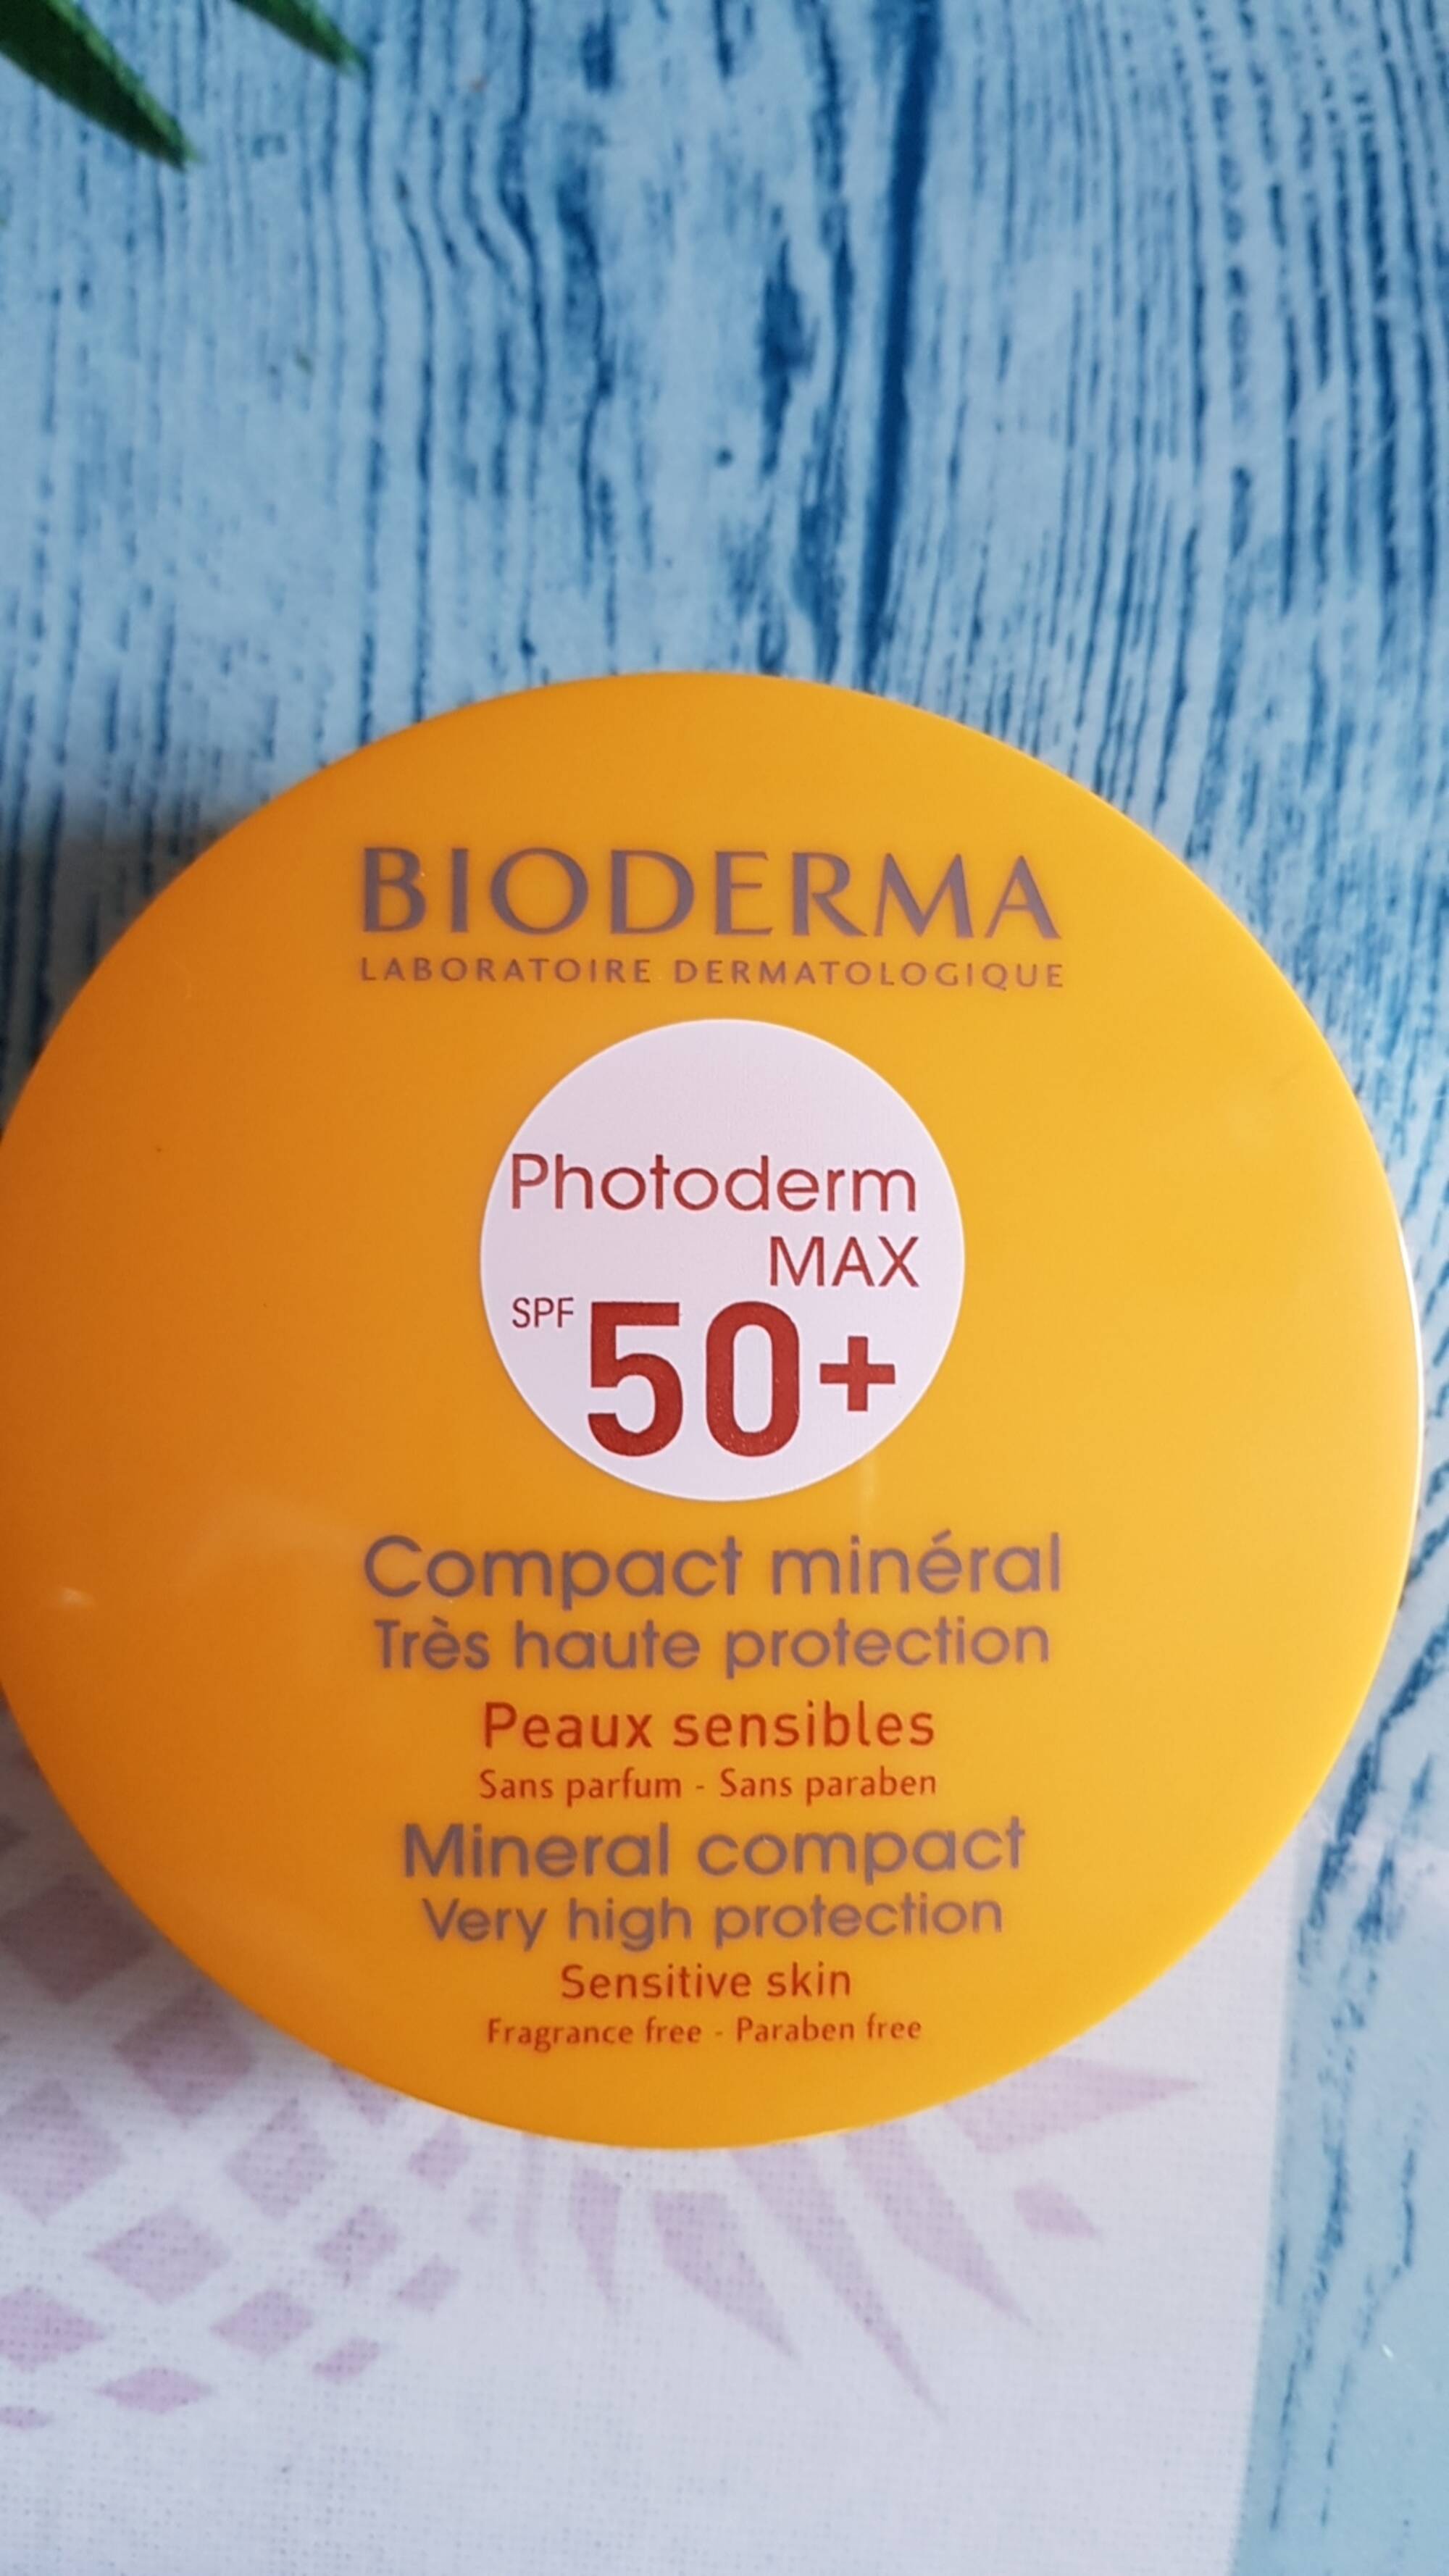 BIODERMA - Photoderm max - Compact minéral très haute protection SPF 50+